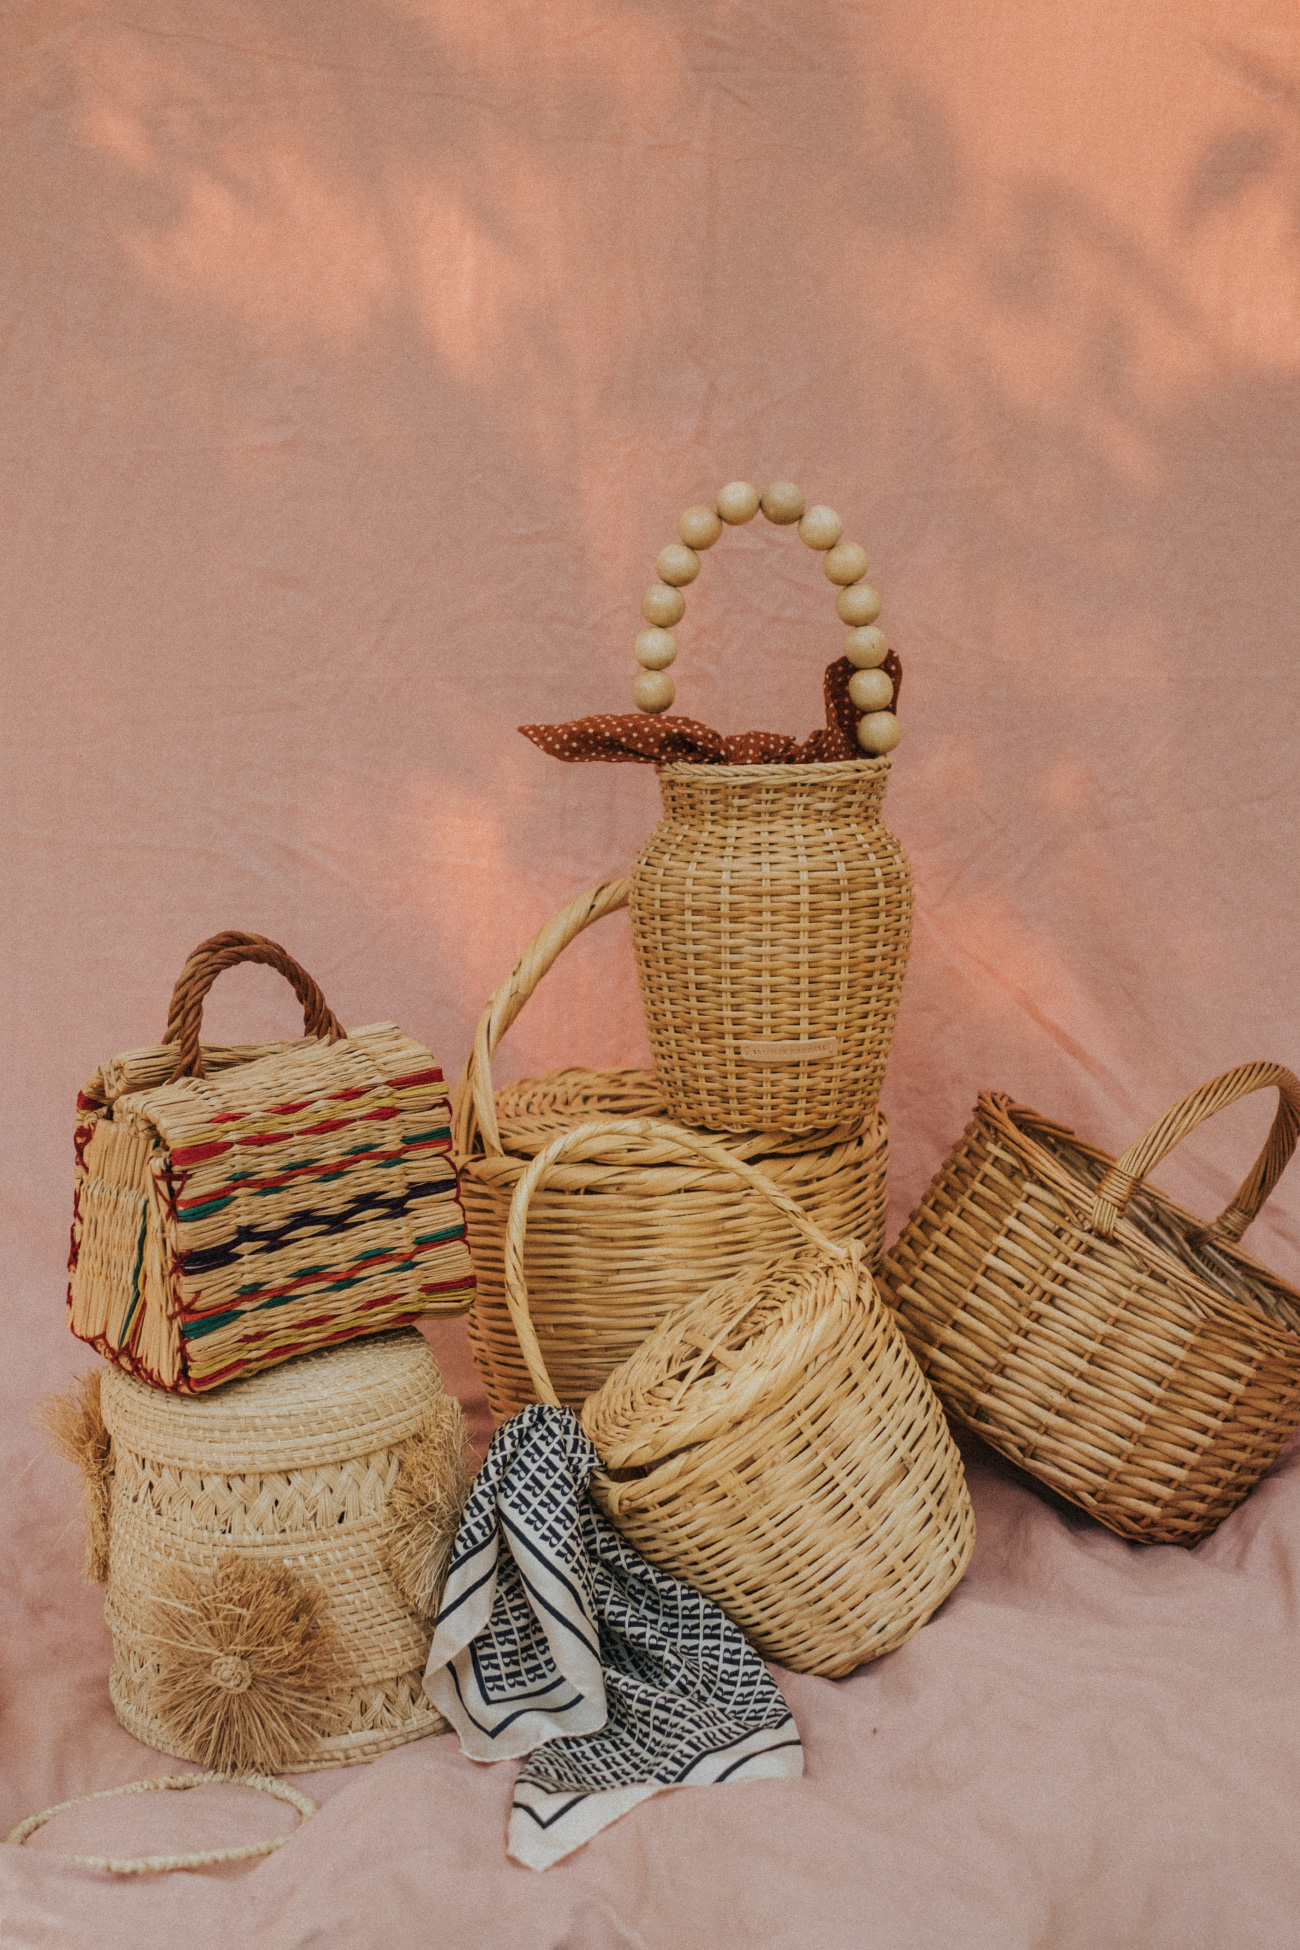 Bonjour Coco Brings the Real Handmade Jane Birkin Basket to Market